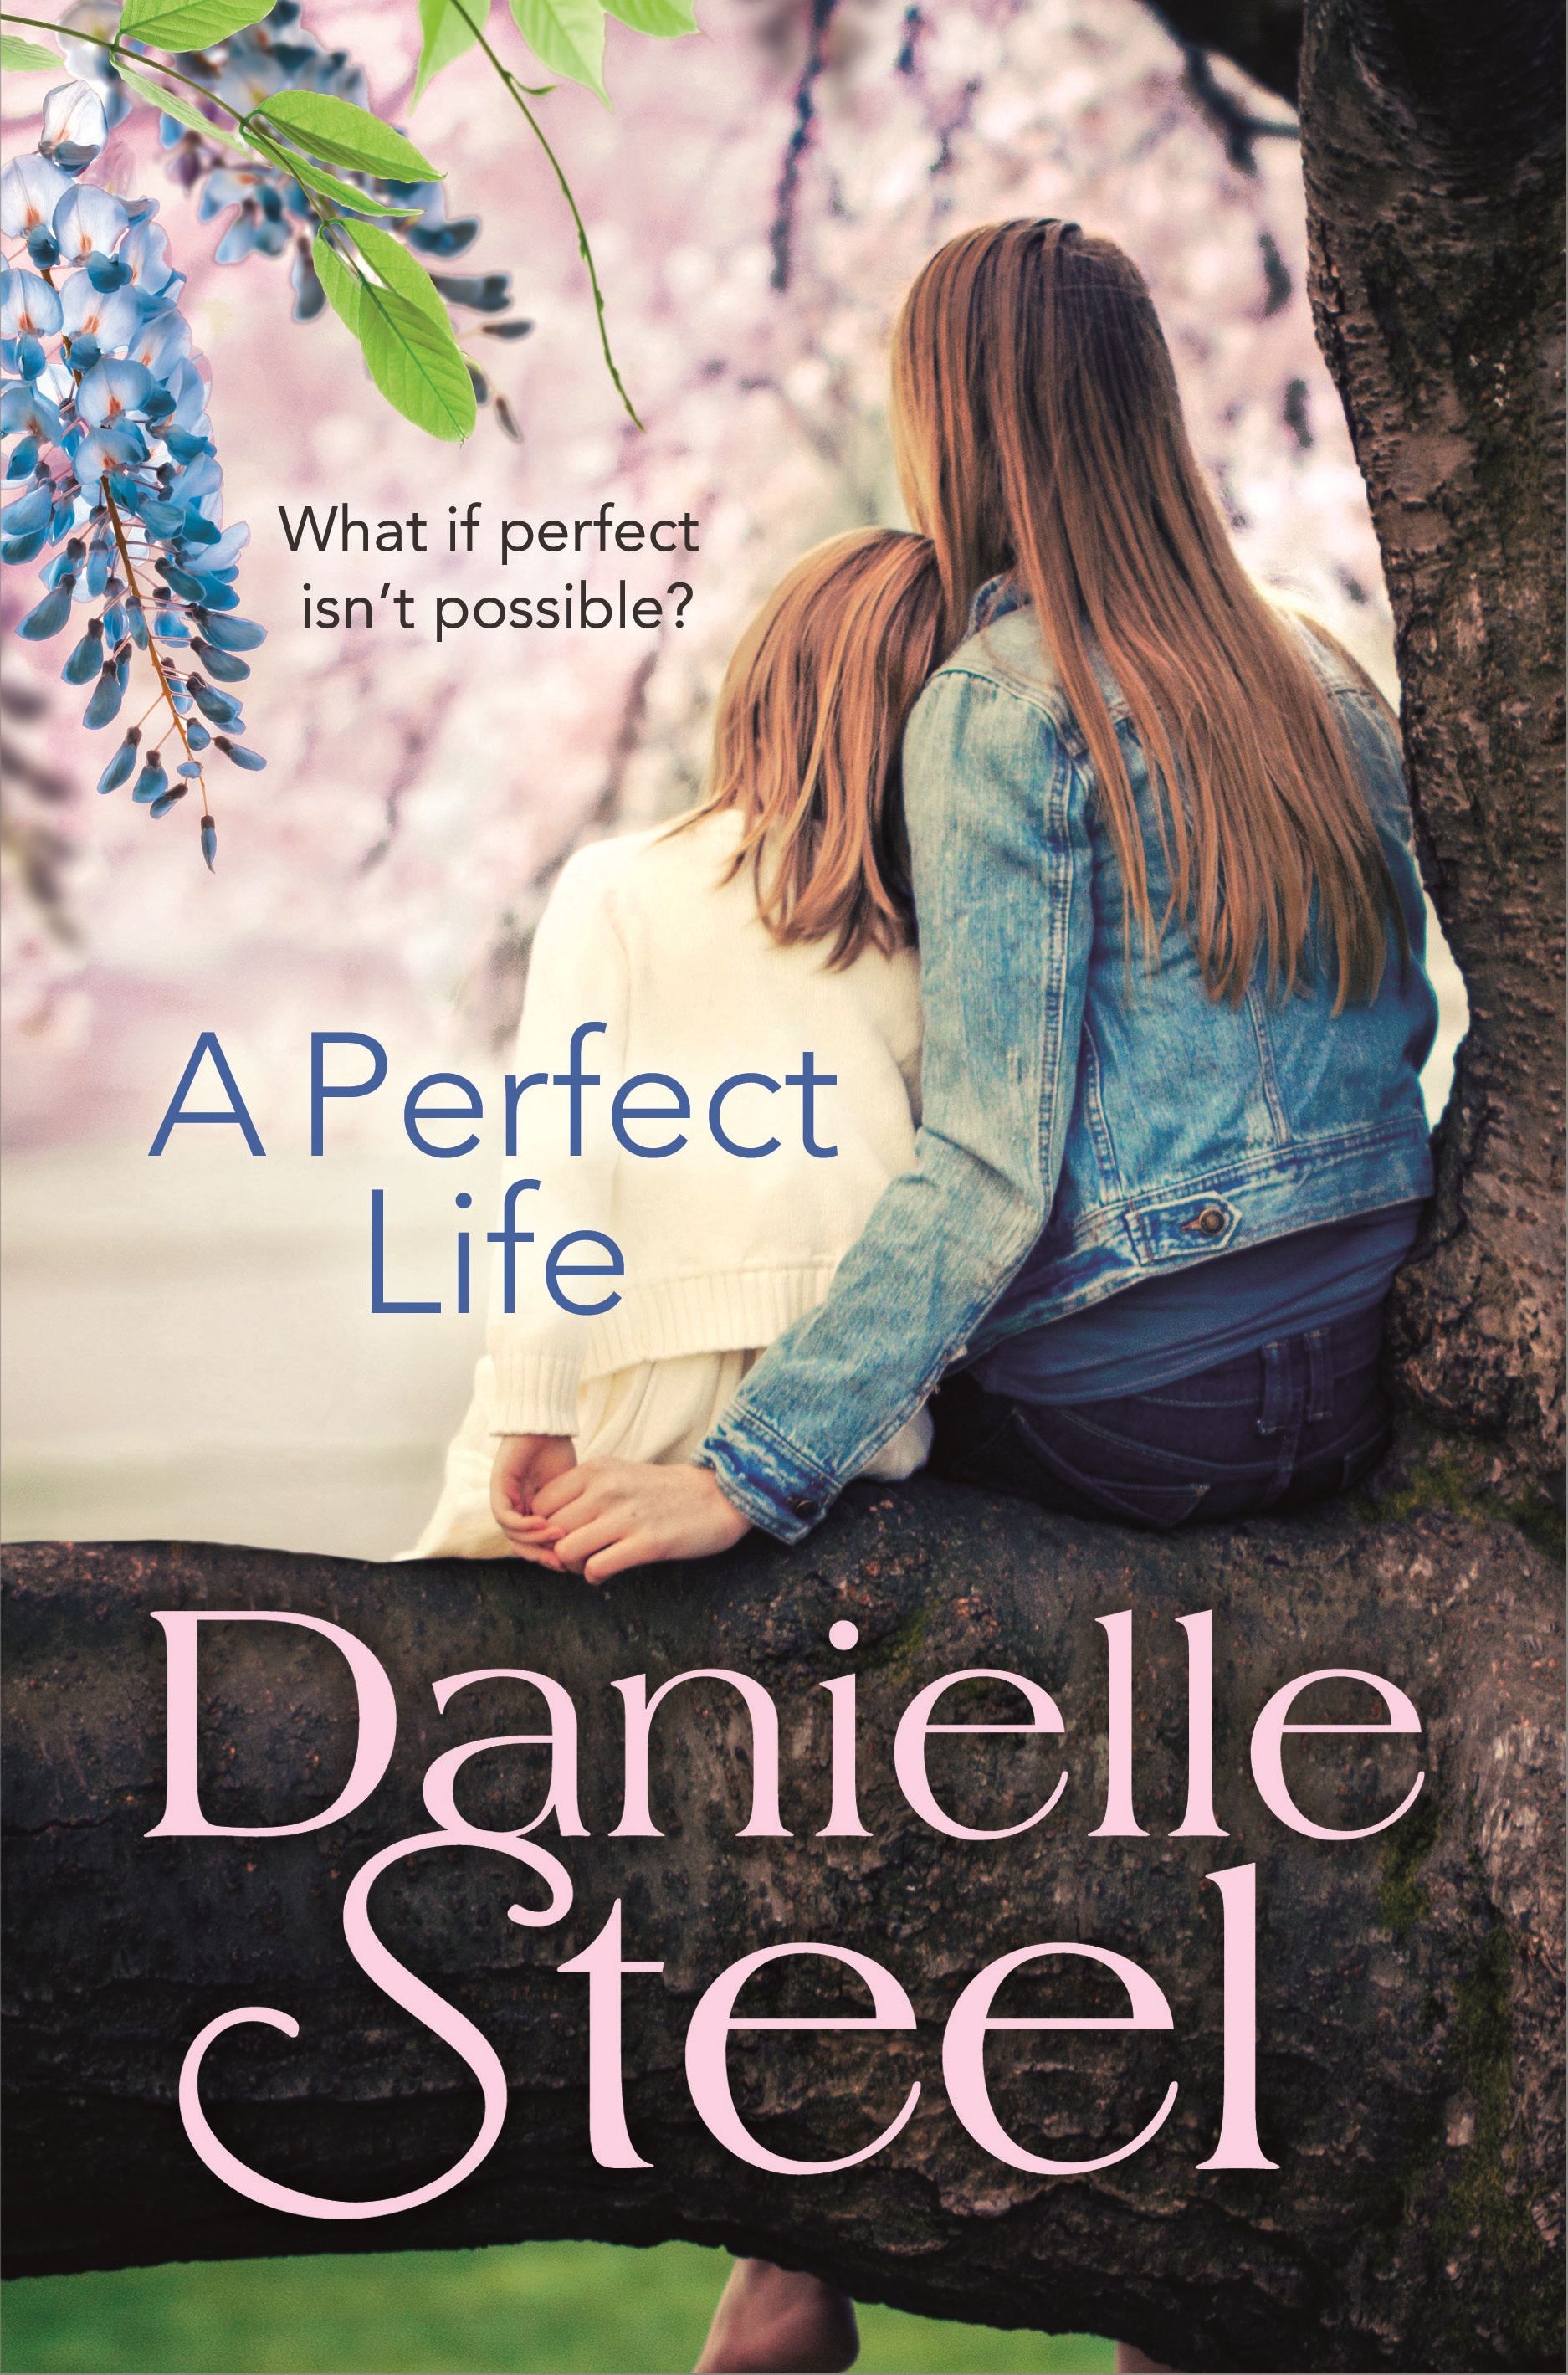 Perfect life 3. Perfect Life. Steel d. "perfect Life". Danielle Steel "a good woman".